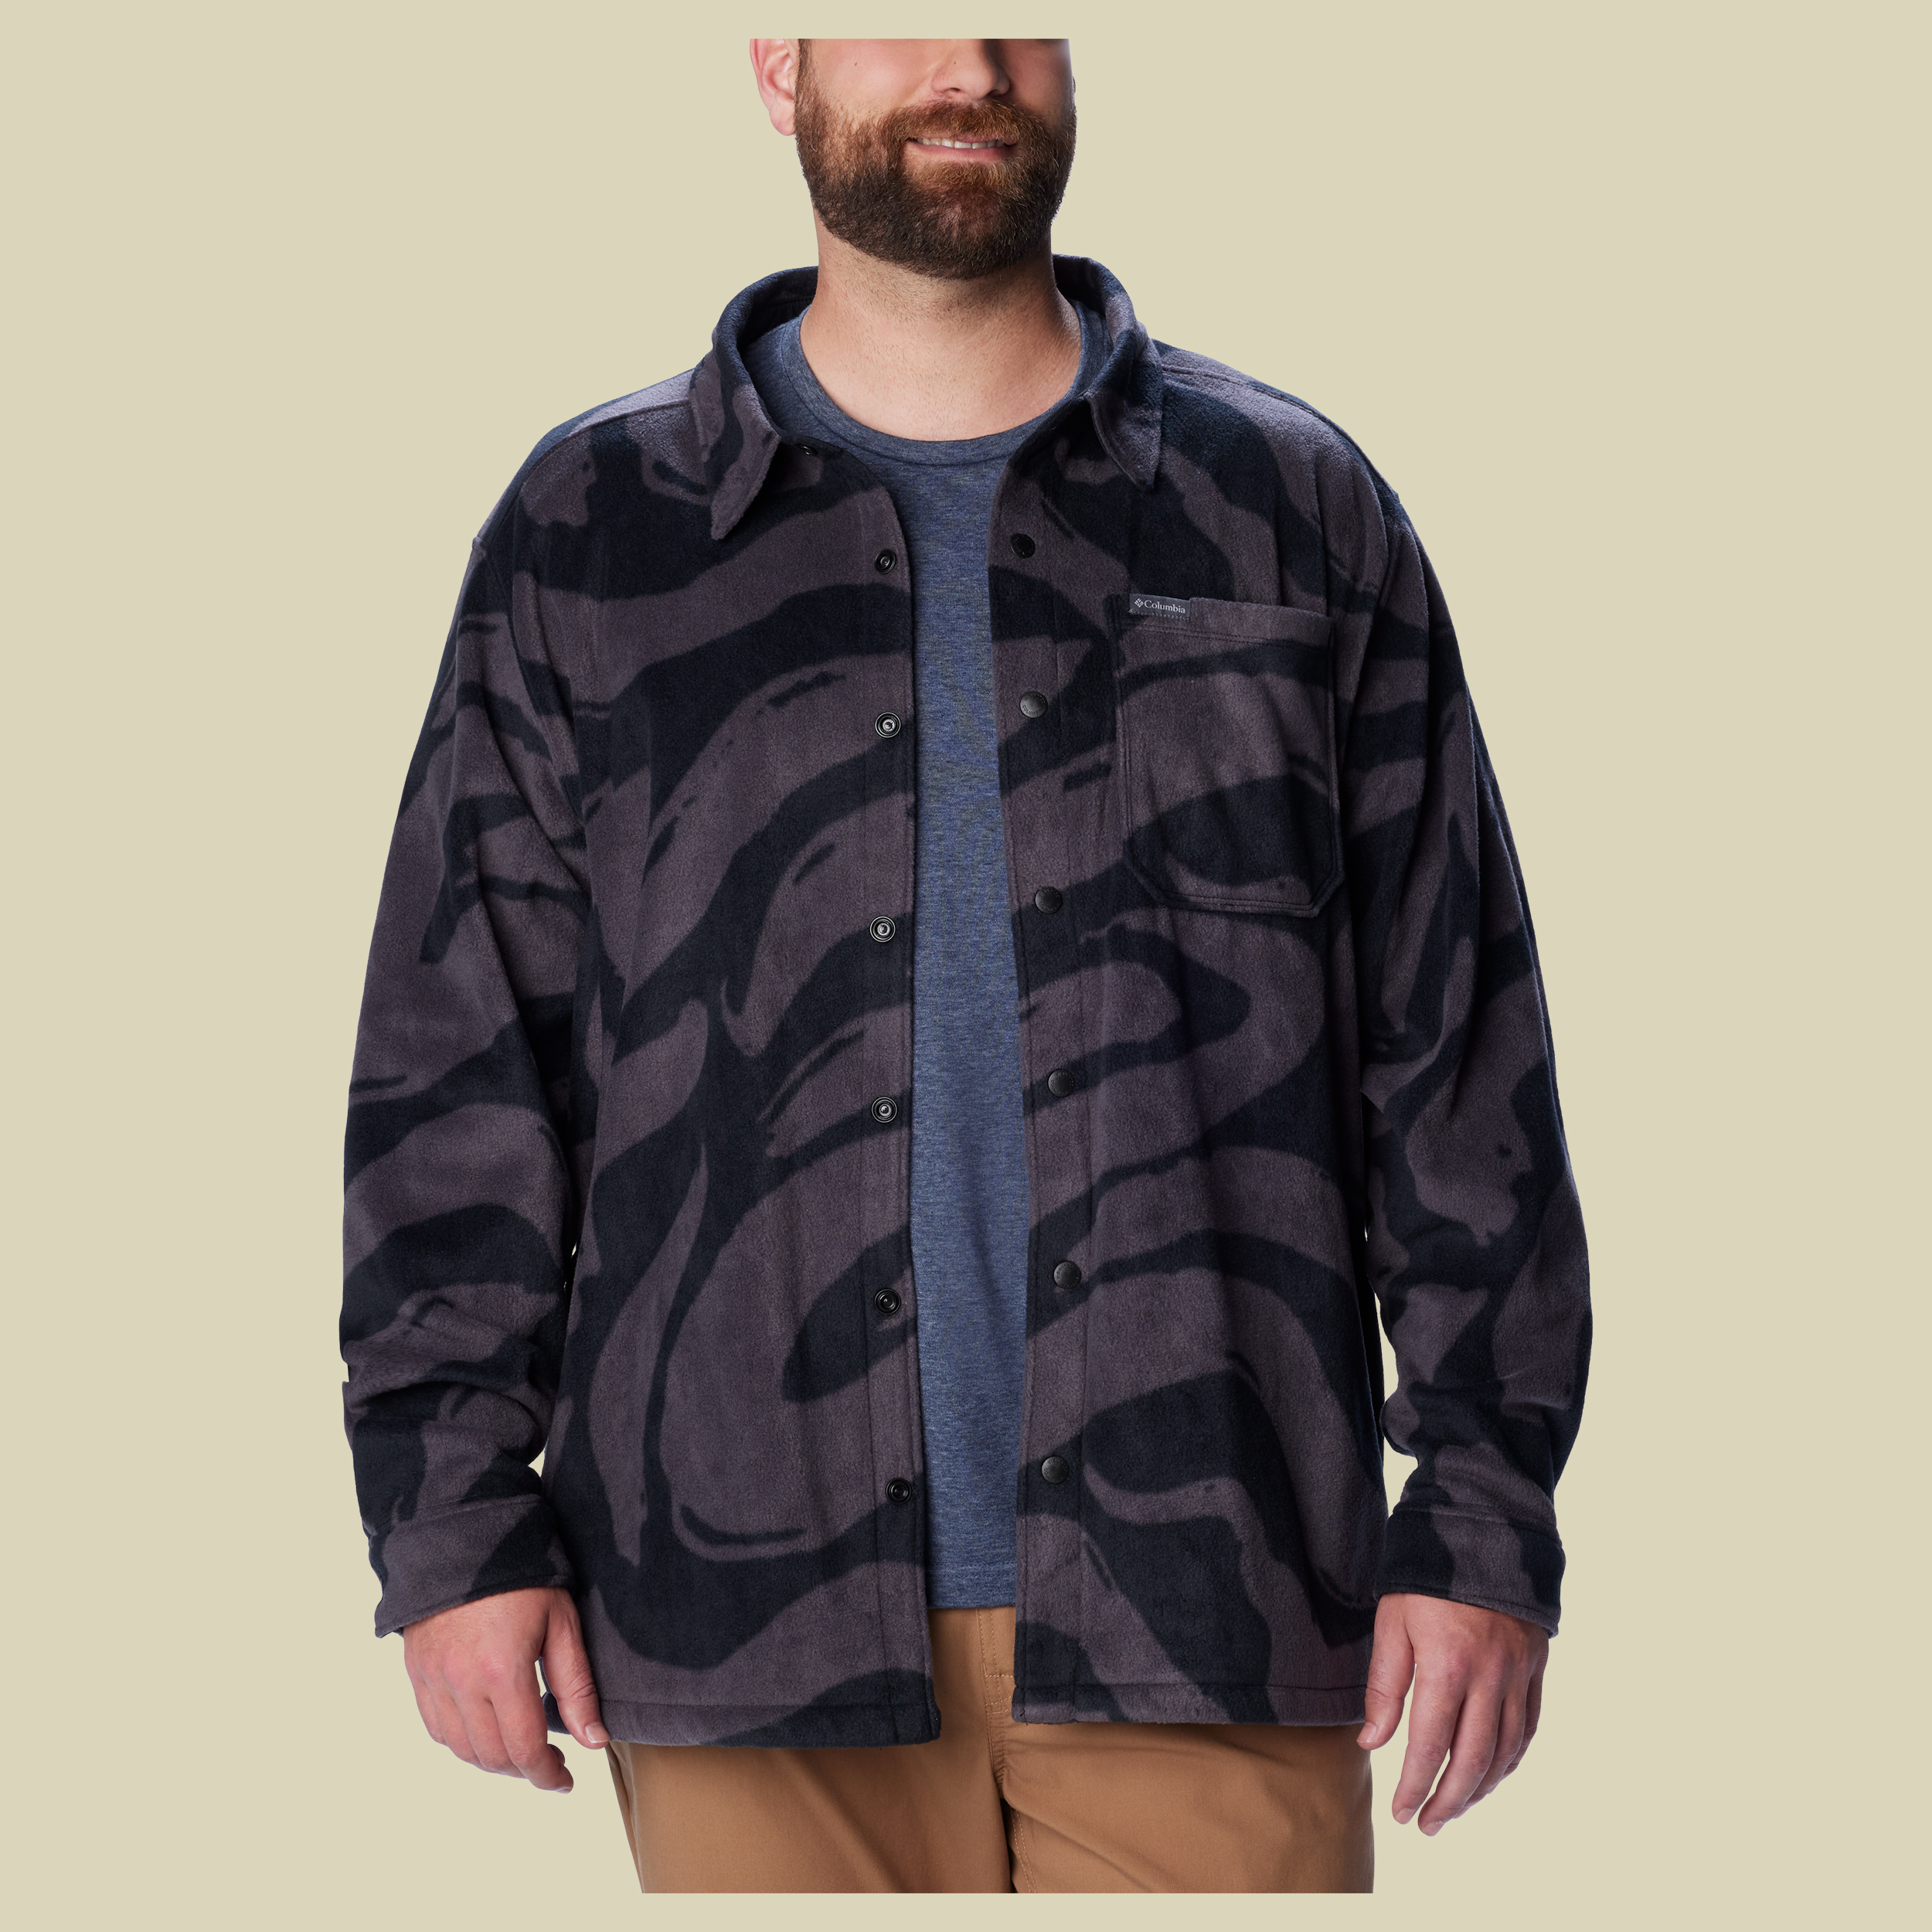 Steens Mountain Printed Jacket Men